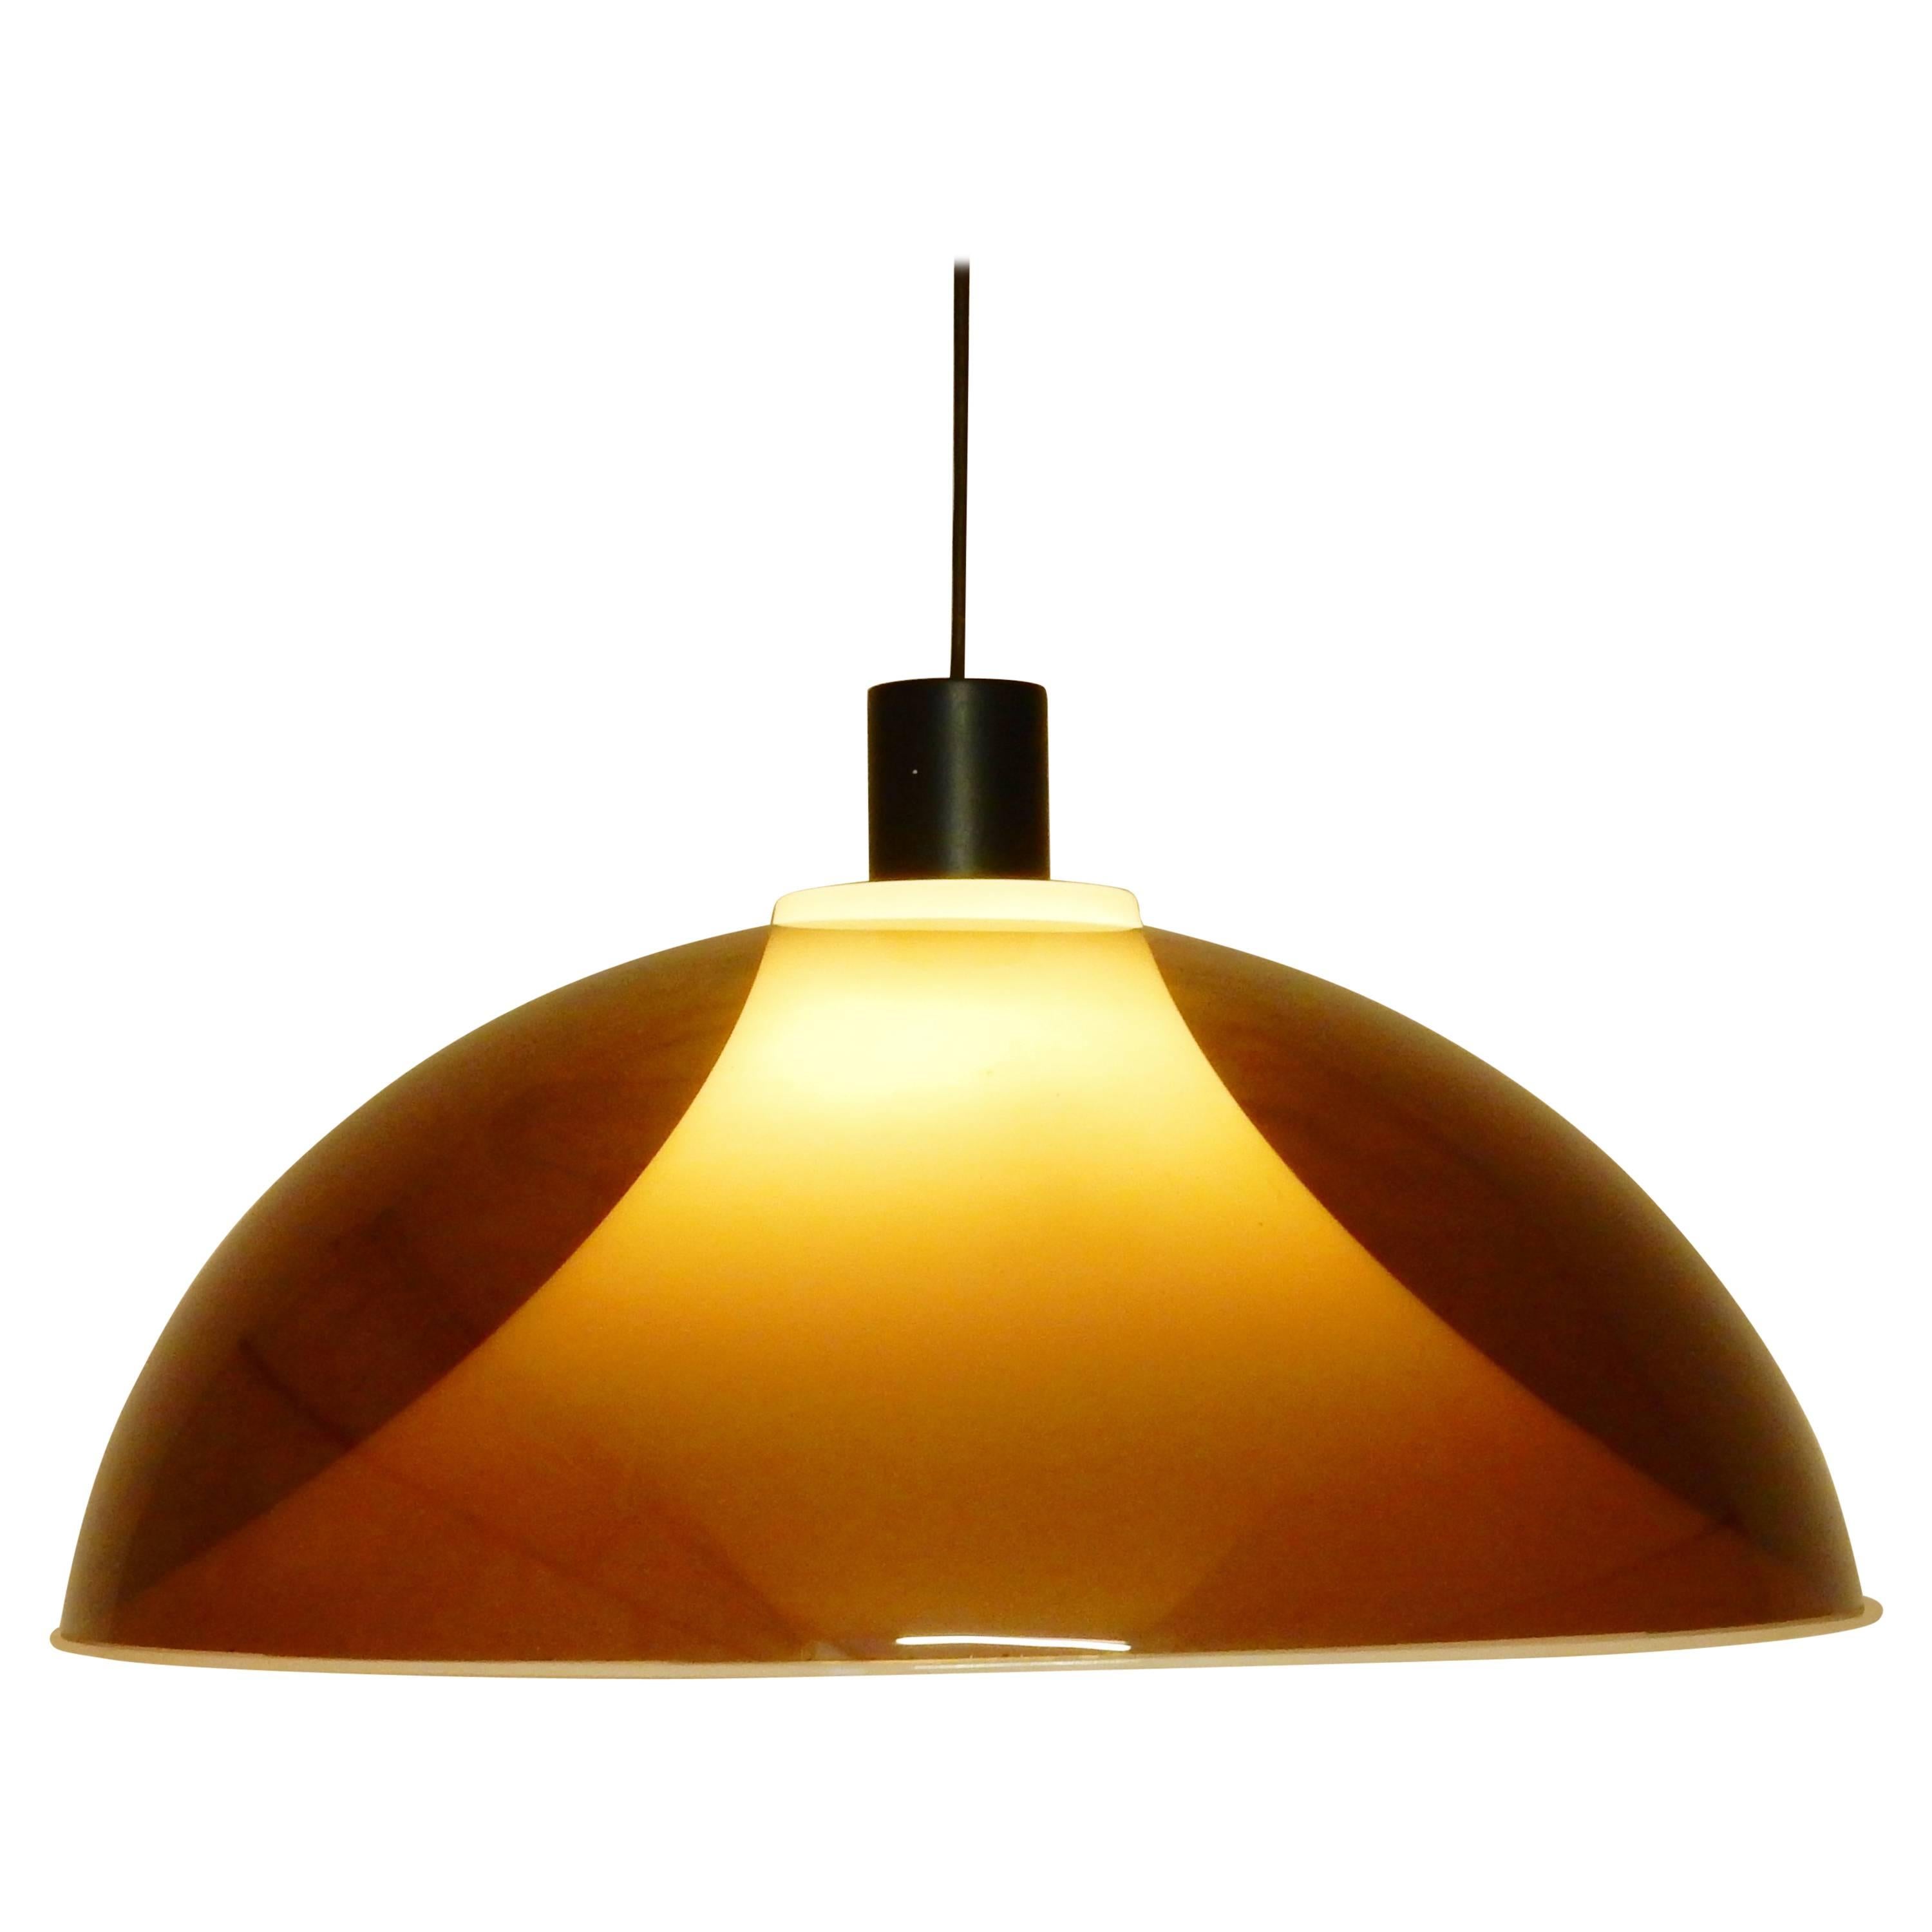 1960s Pendant Light, attributed to Gino Sarfatti for Arteluce, Italy